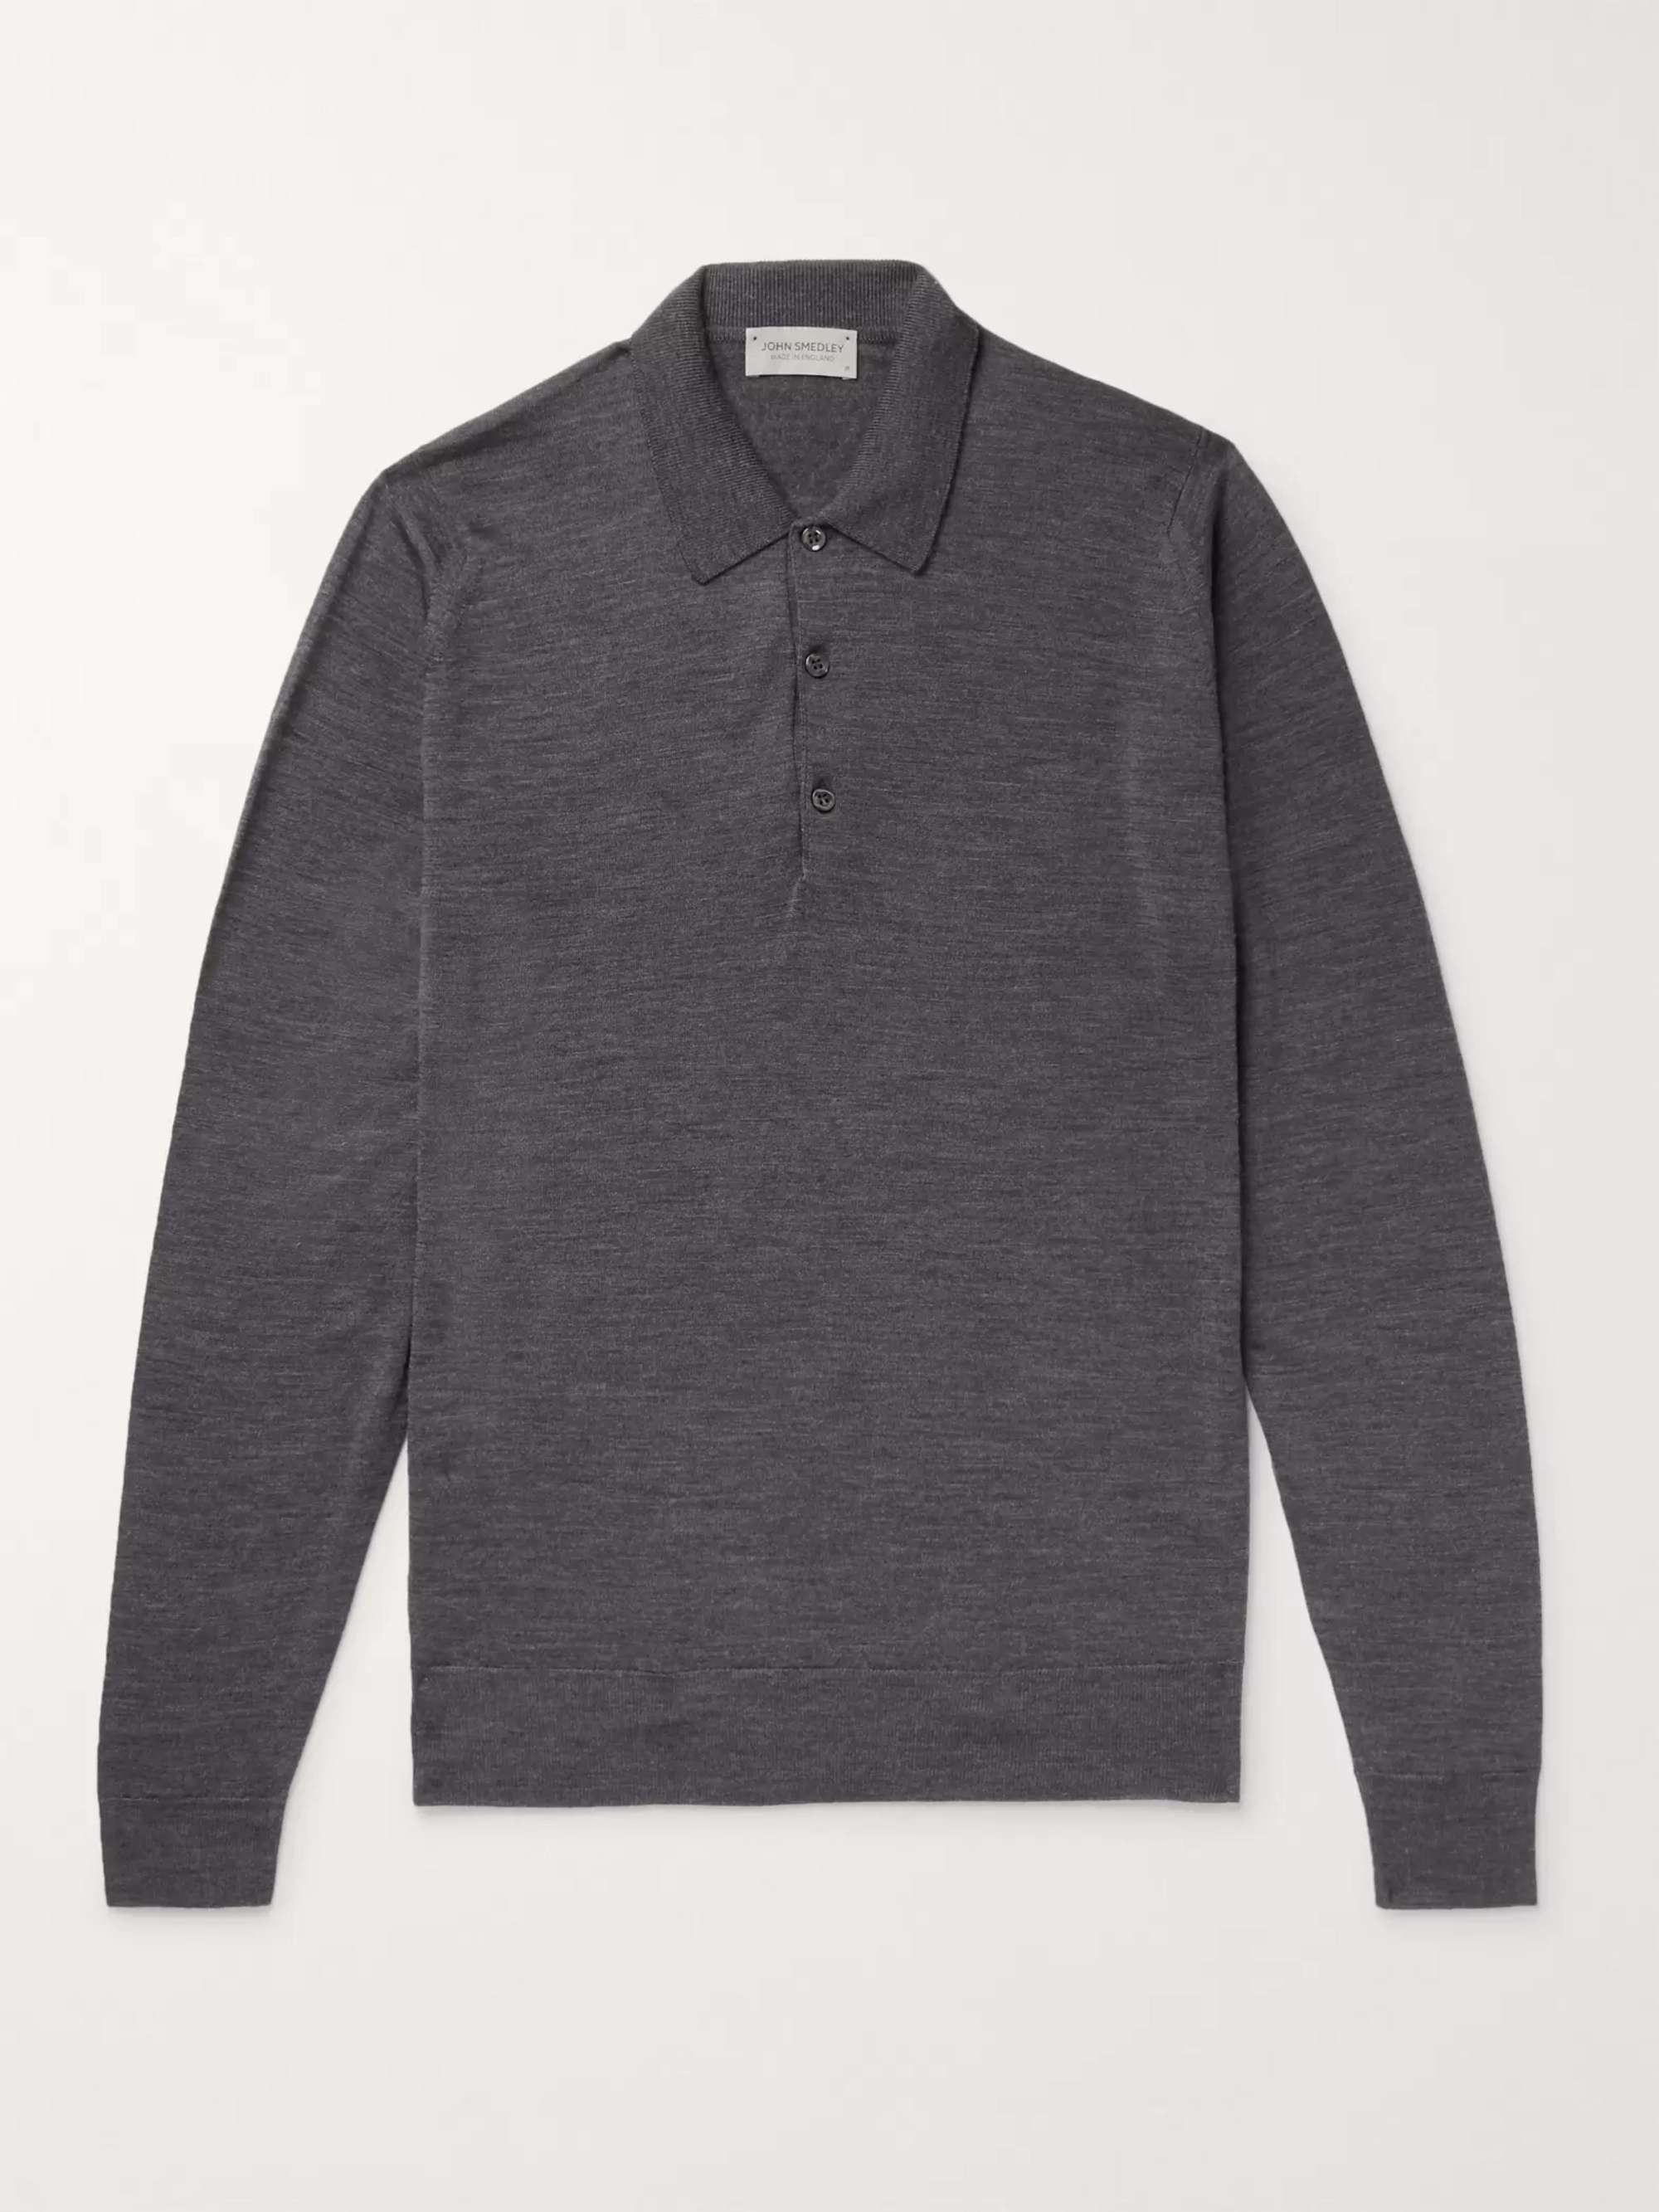 JOHN SMEDLEY Belper Slim-Fit Merino Wool Polo Shirt | MR PORTER